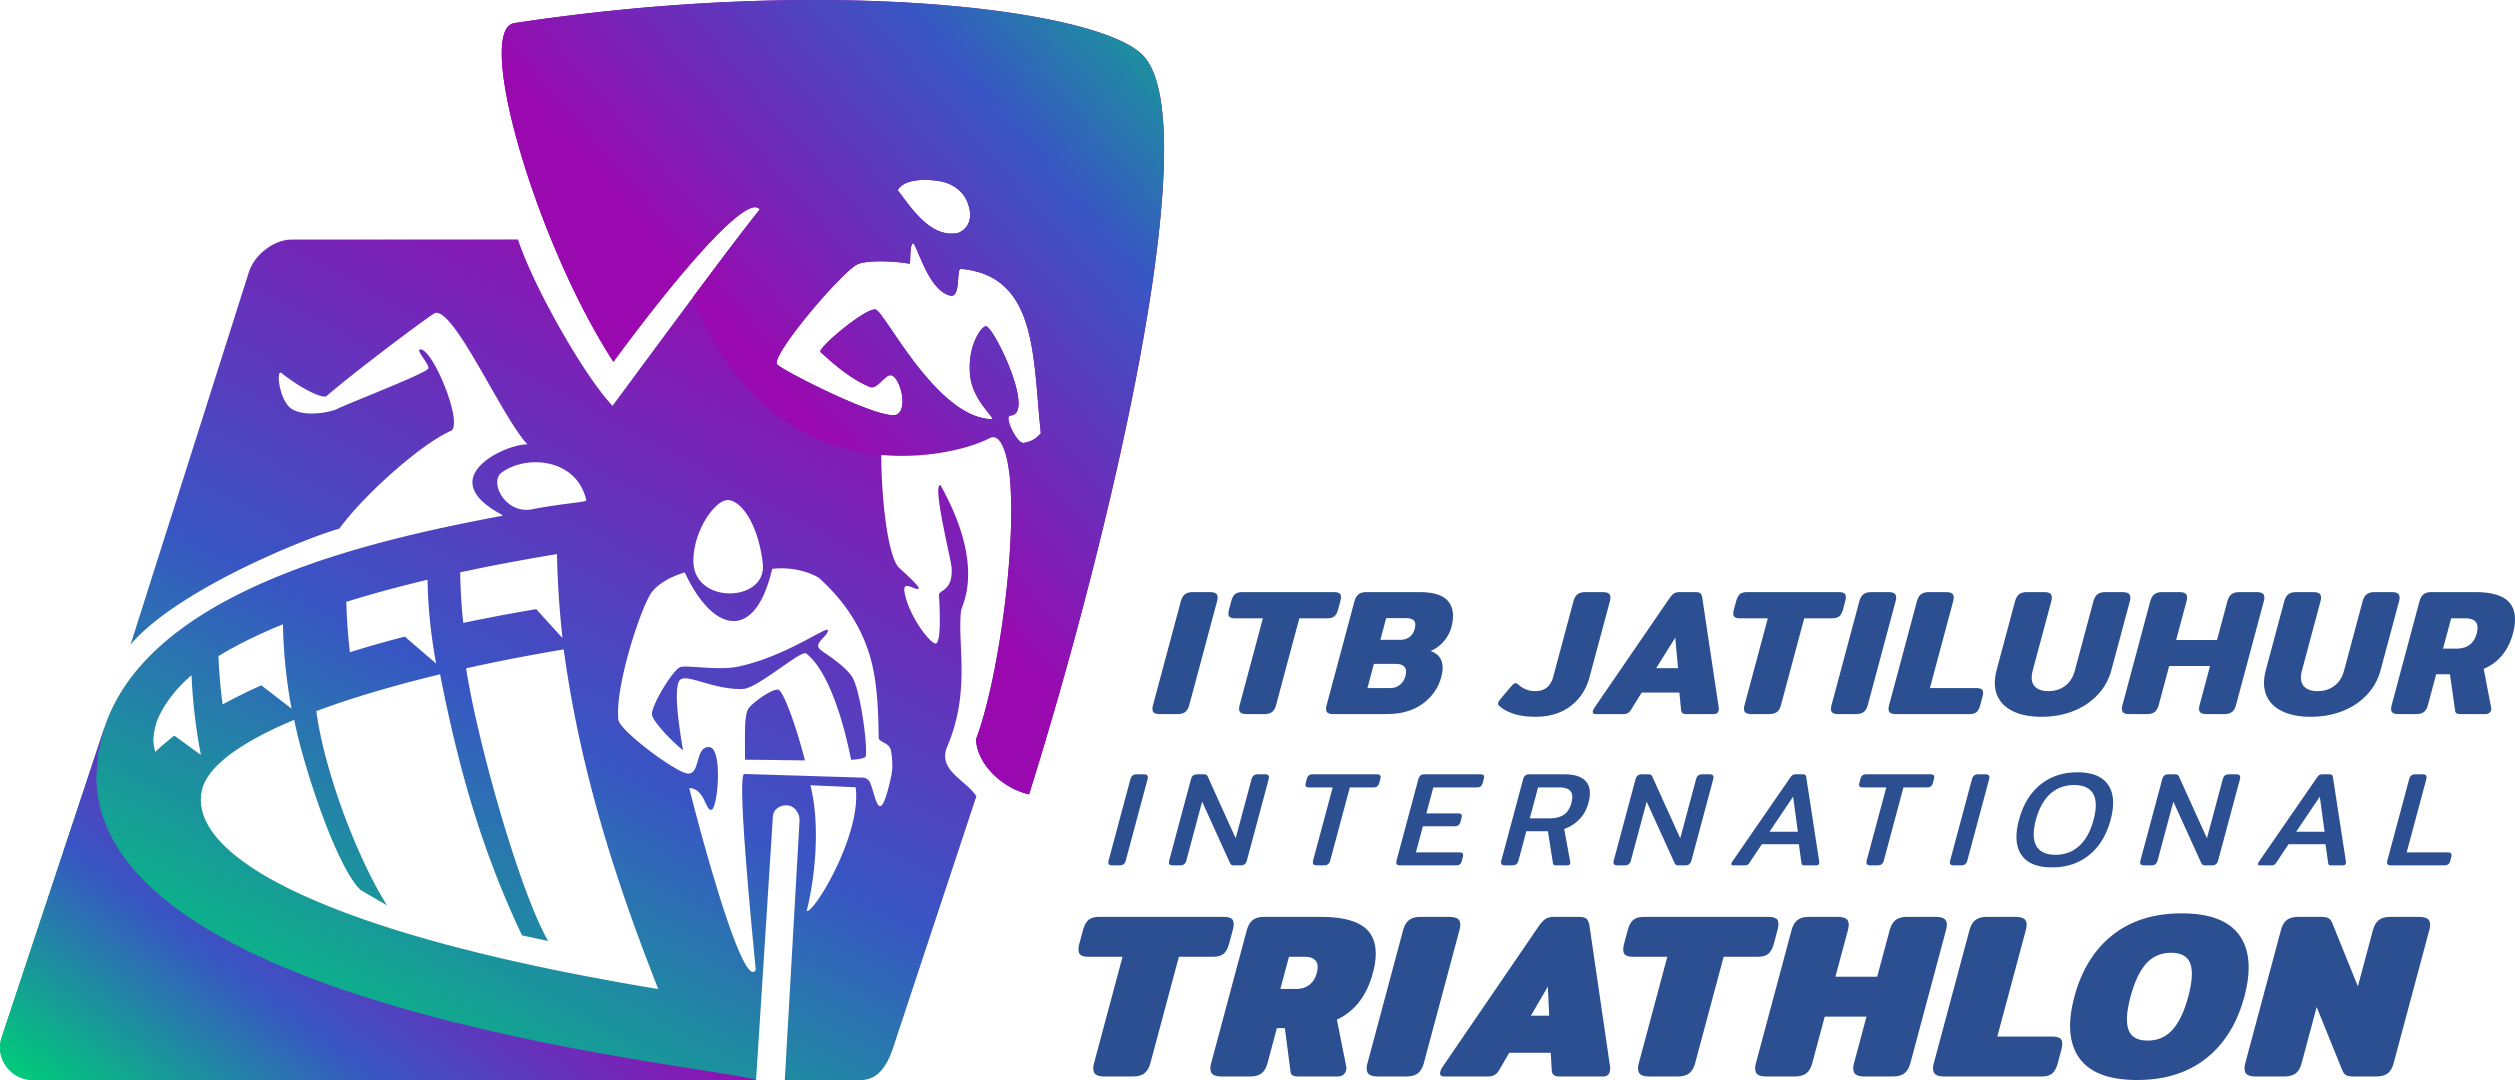 ITB Jatiluhur International Triathlon